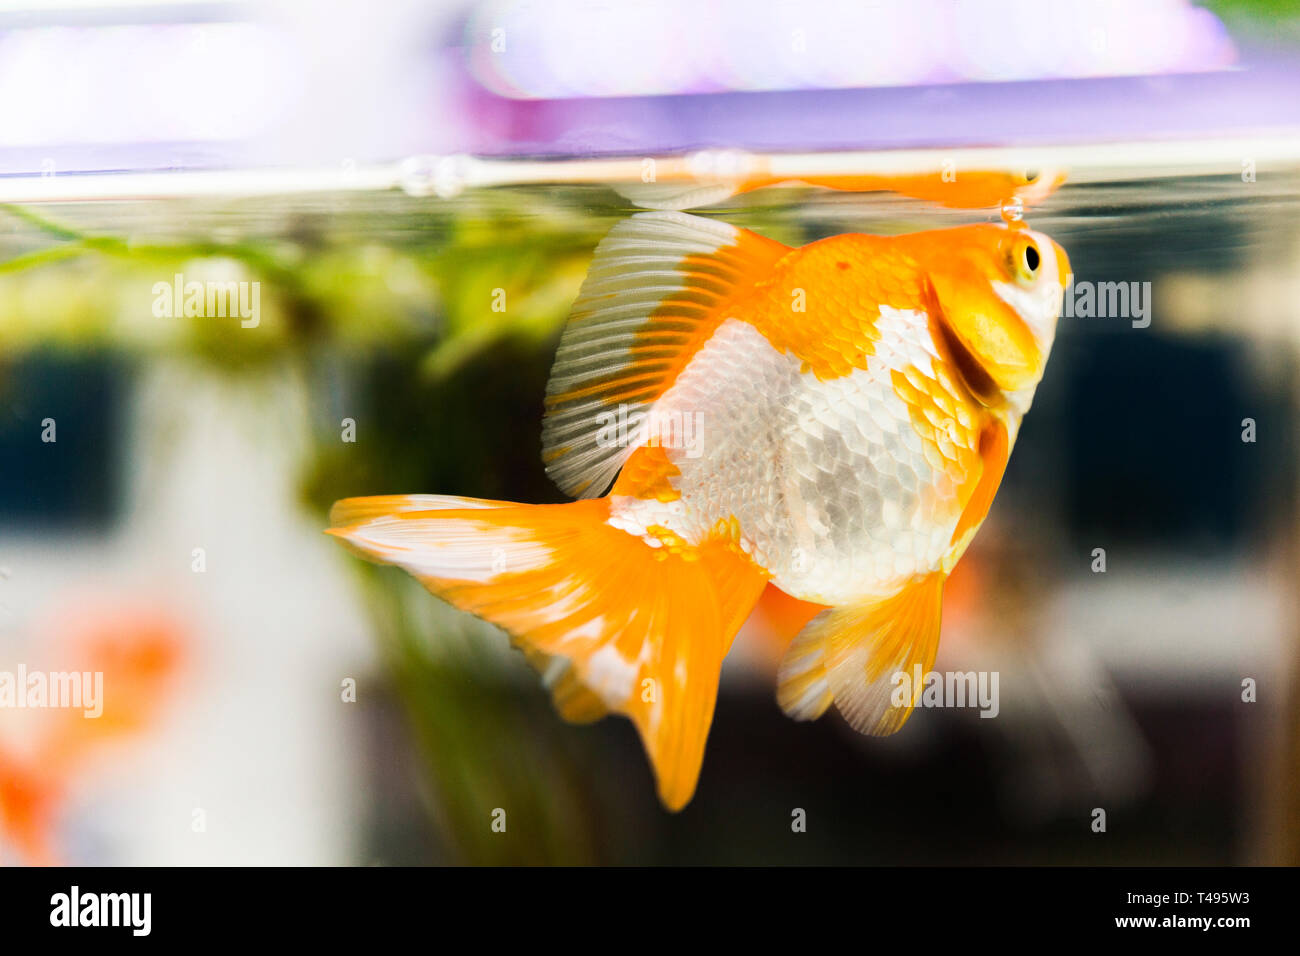 Bright orange fresh water Ryukin fish surfacing in aquarium tank. Stock Photo